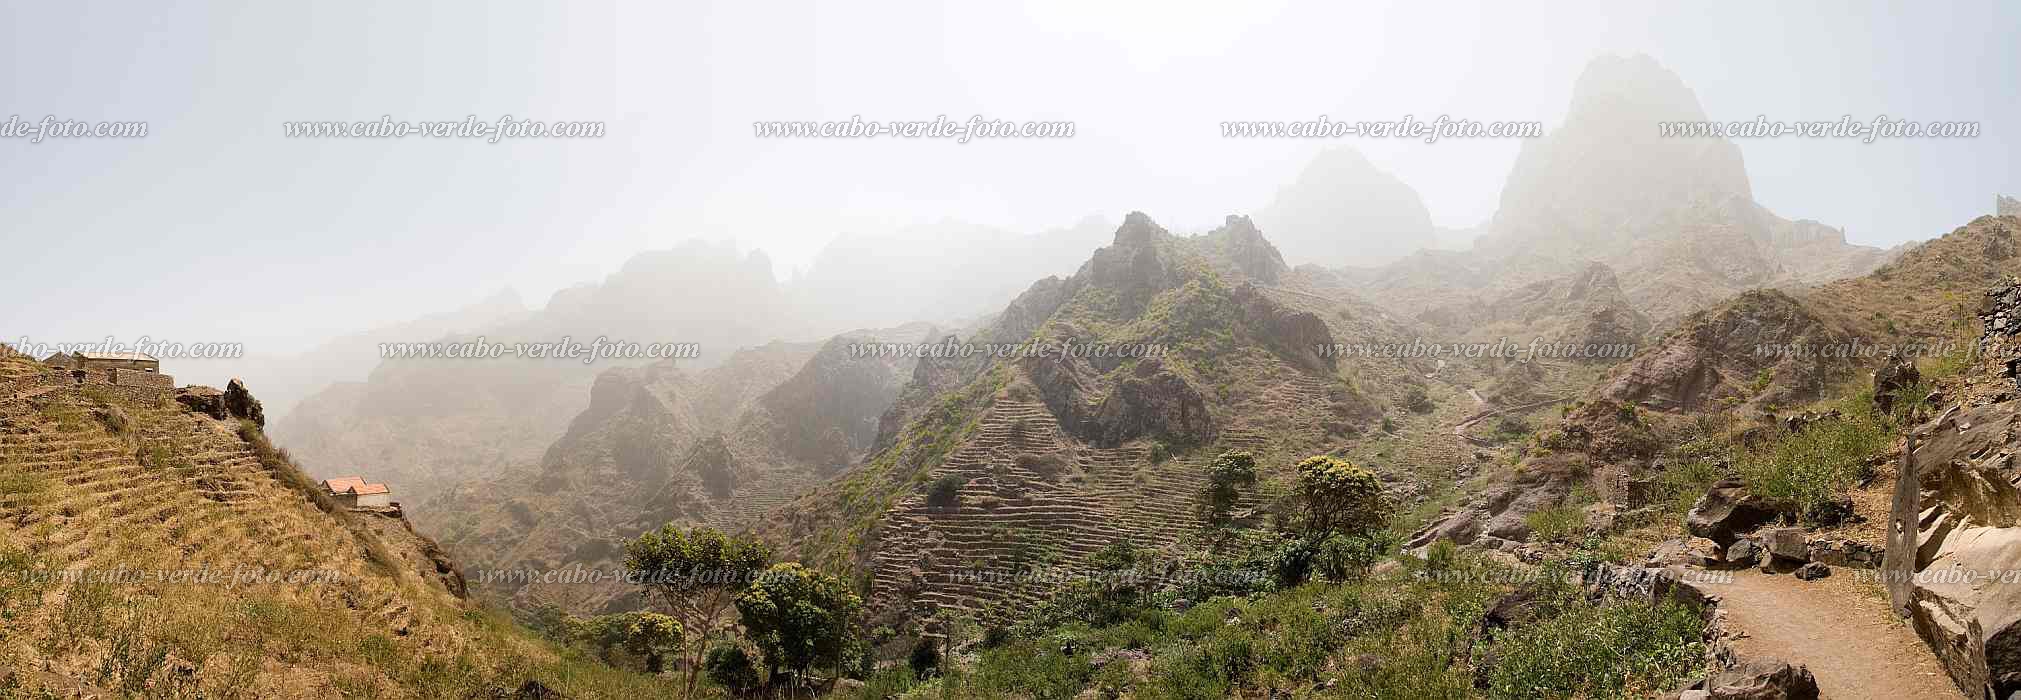 Insel: So Nicolau  Wanderweg:  Ort:  Motiv:  Motivgruppe: Landscape Mountain © Florian Drmer www.Cabo-Verde-Foto.com